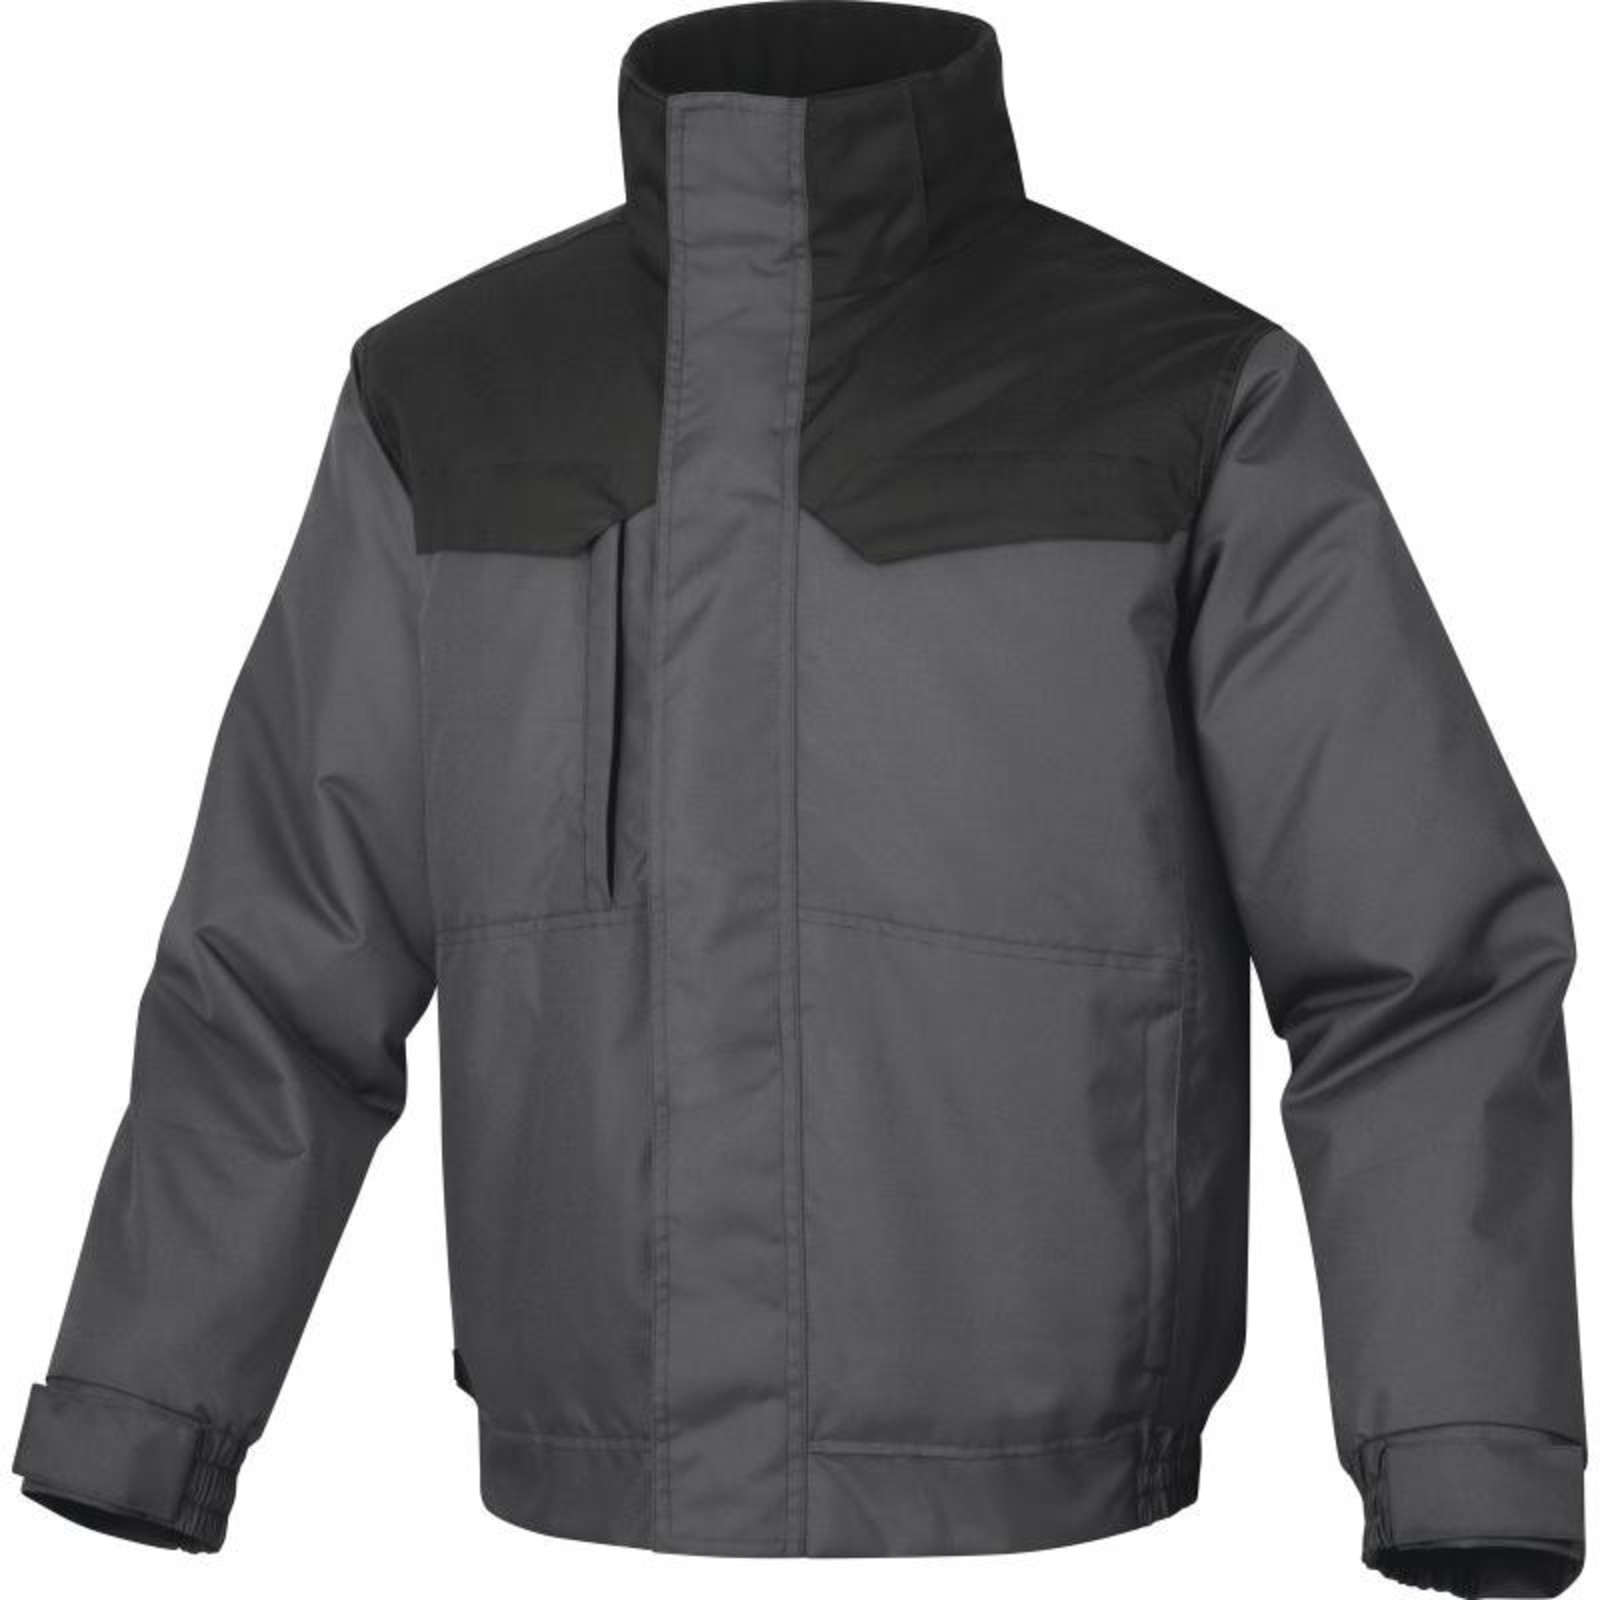 Zimná pánska bunda Delta Plus Northwood3 - veľkosť: XL, farba: sivá/čierna